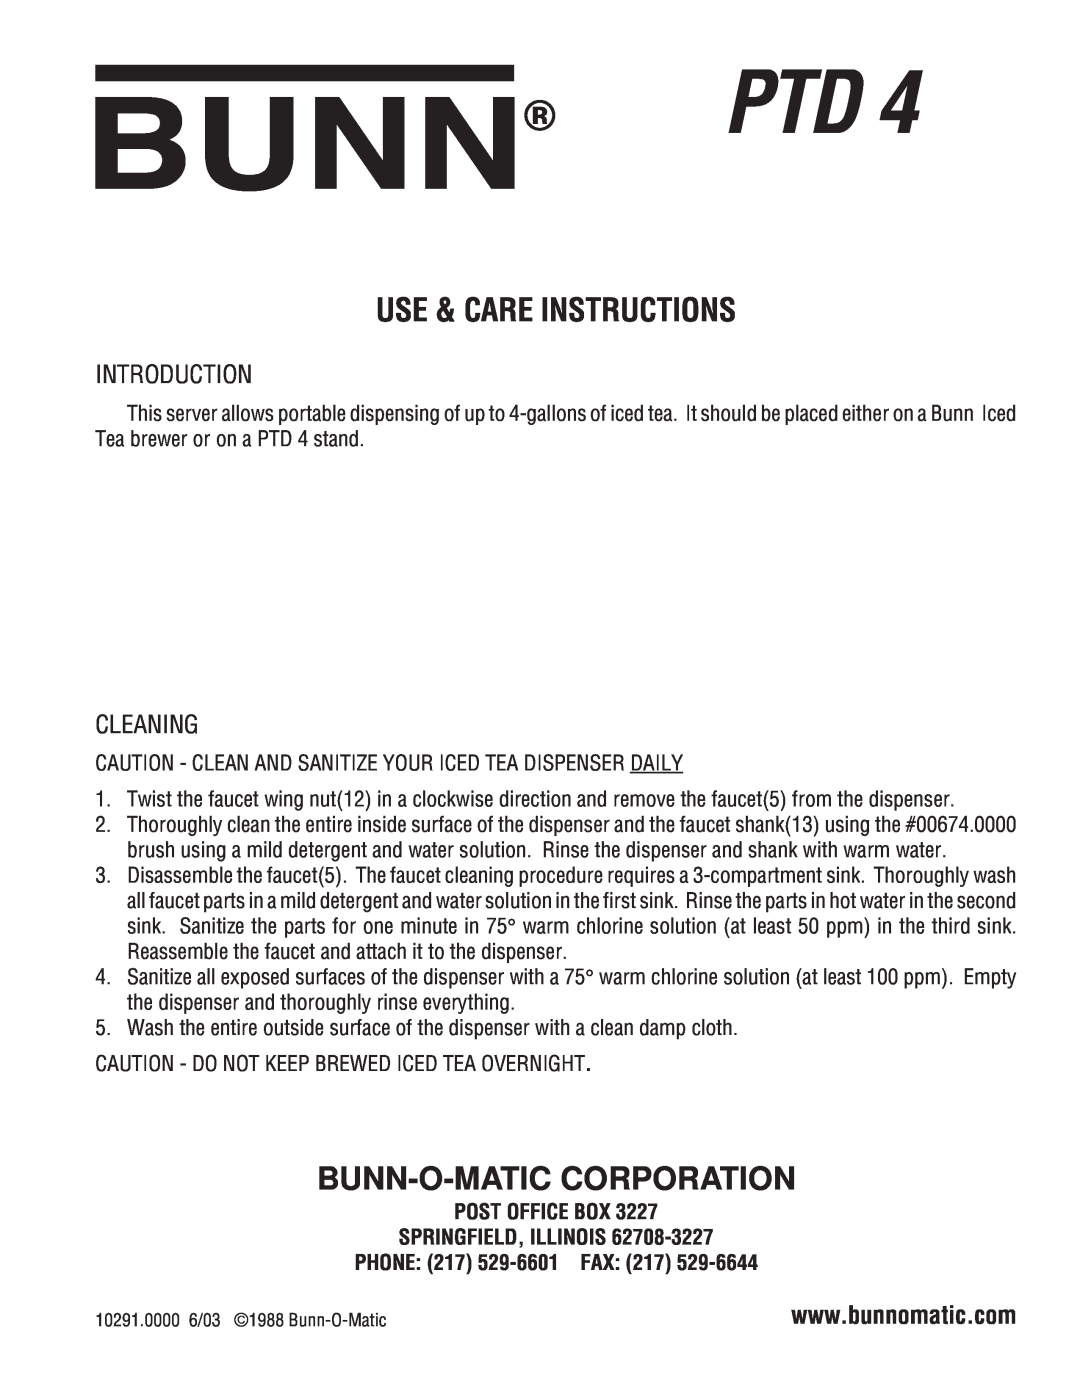 Bunn PTD 4 manual Use & Care Instructions, Bunn-O-Maticcorporation, Introduction, Cleaning, Fax 